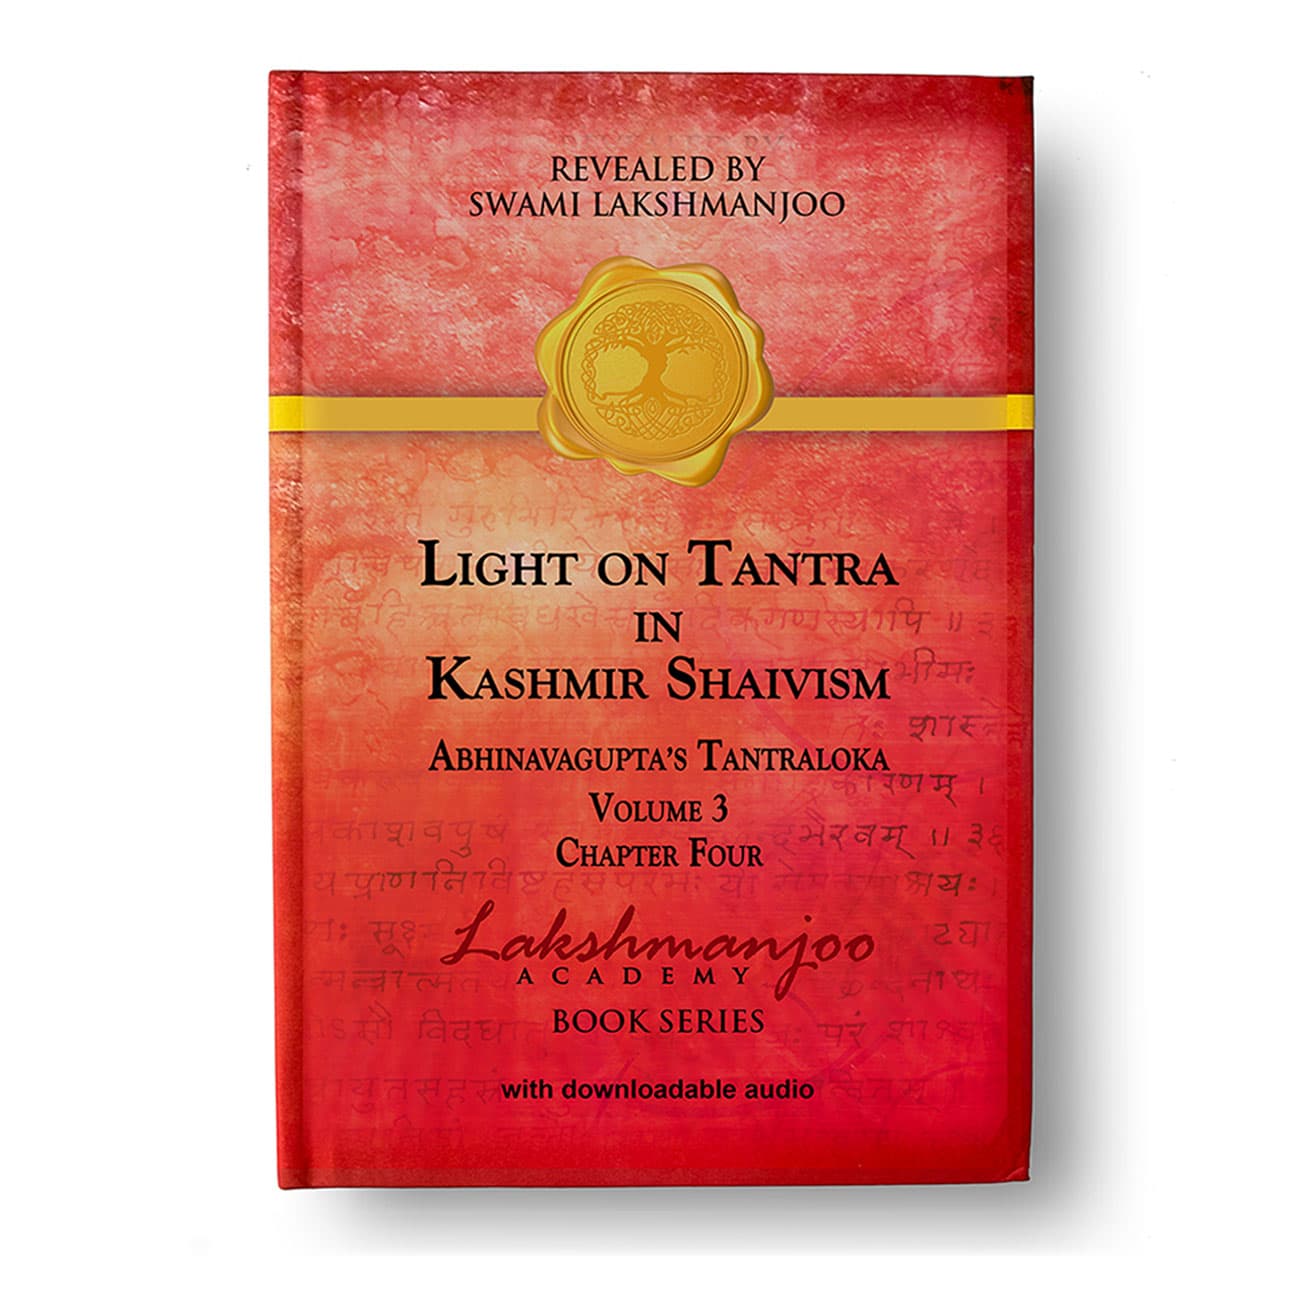 BOOK: Light on Tantra of Kashmir Shaivism, Abhinavagupta's Tantraloka Volume 3, Chapter Four